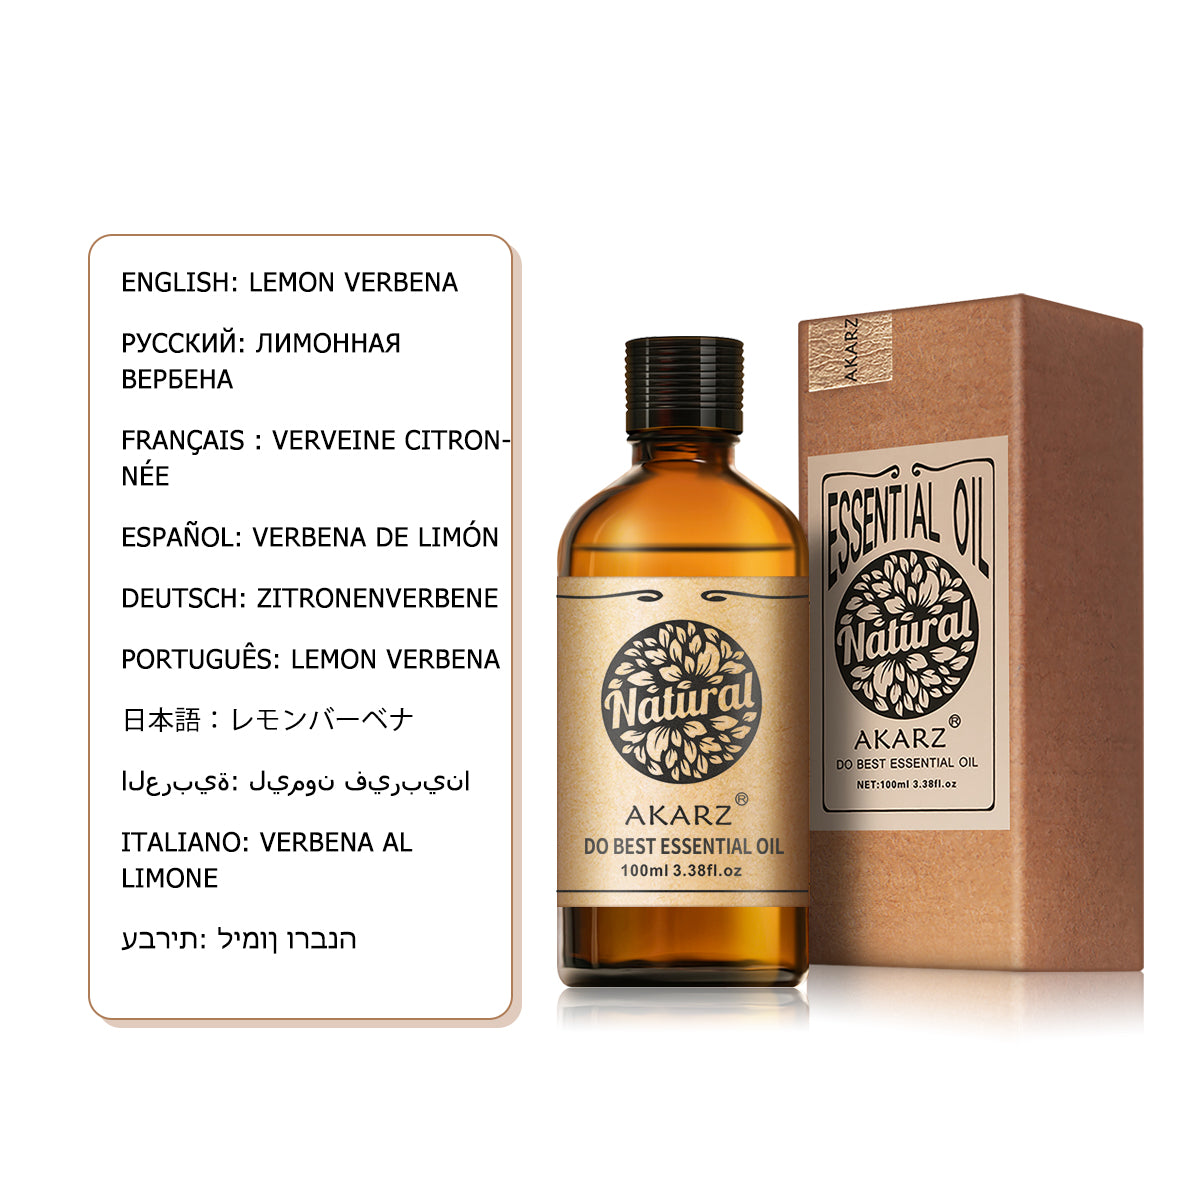 Lemon Verbena Oil: Benefits & Uses